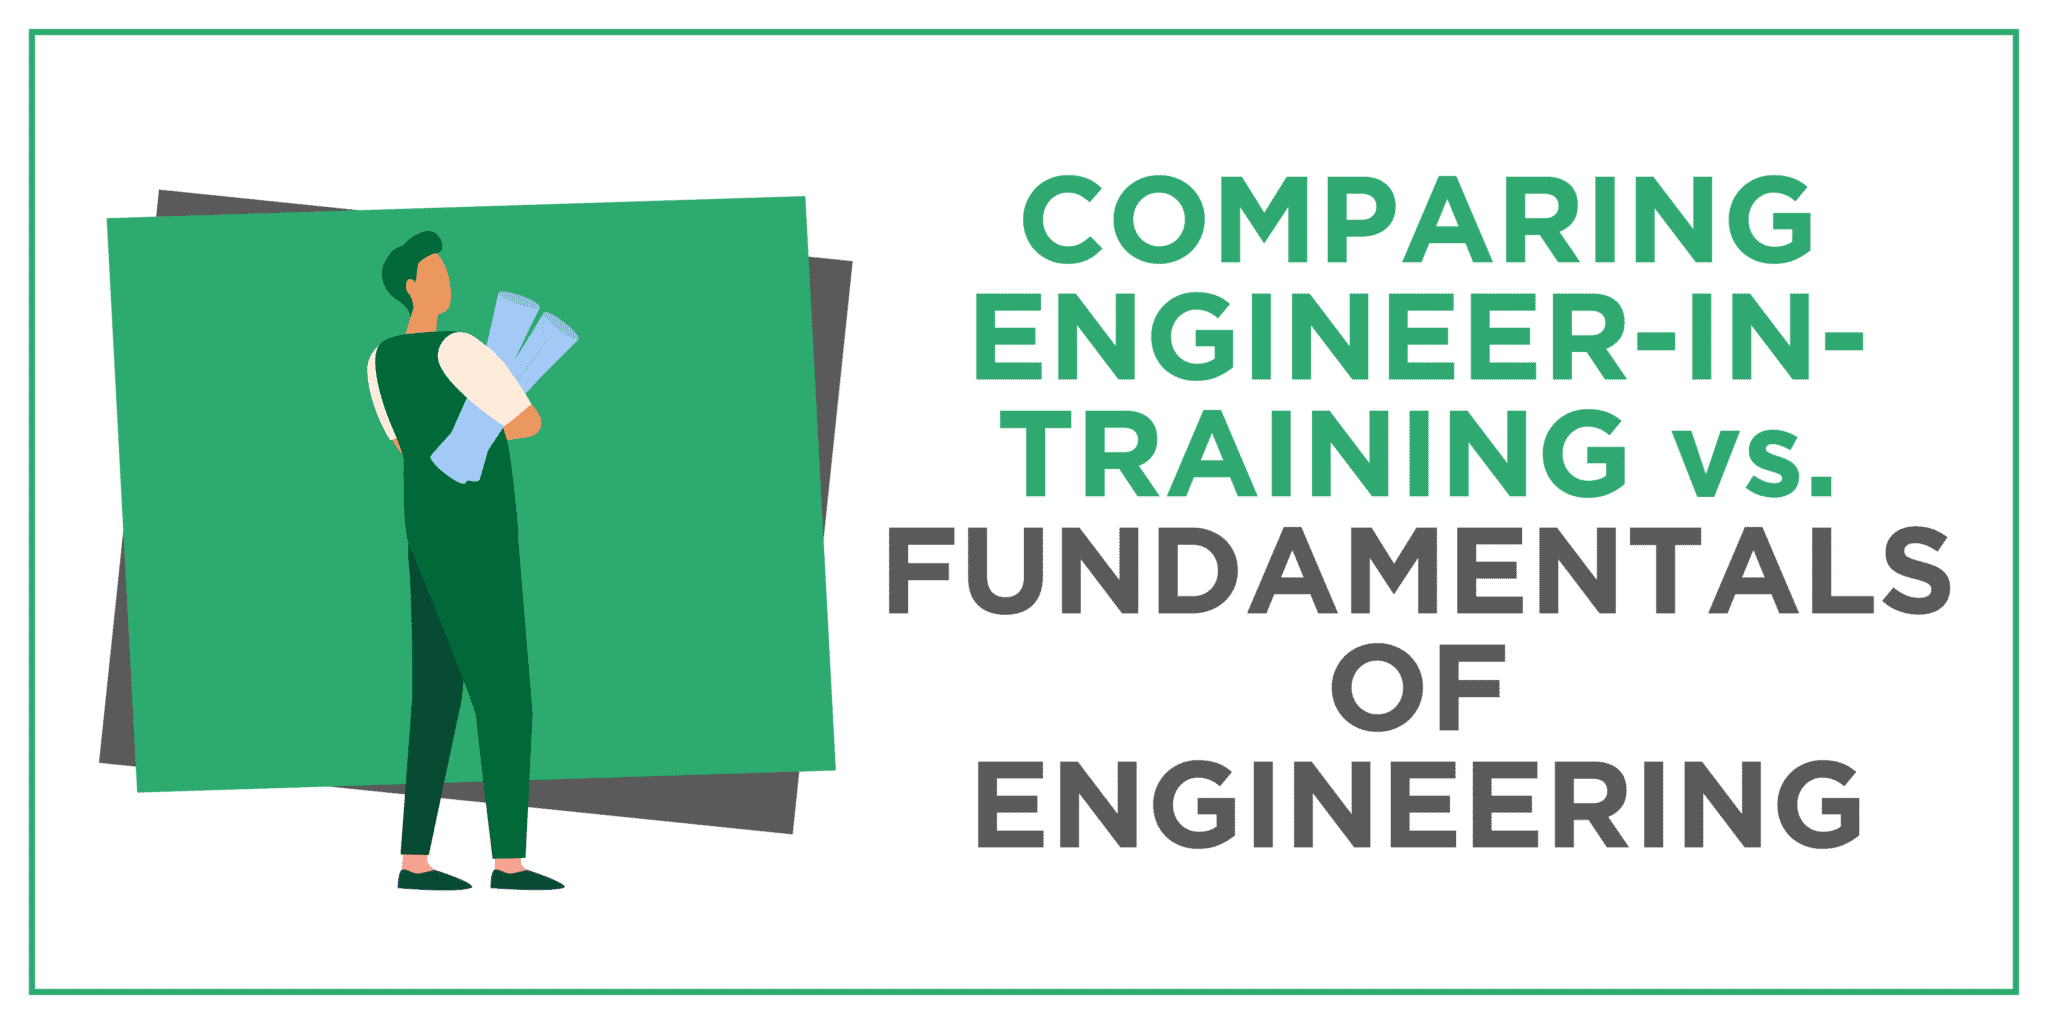 Engineer-In-Training vs. Fundamentals of Engineering